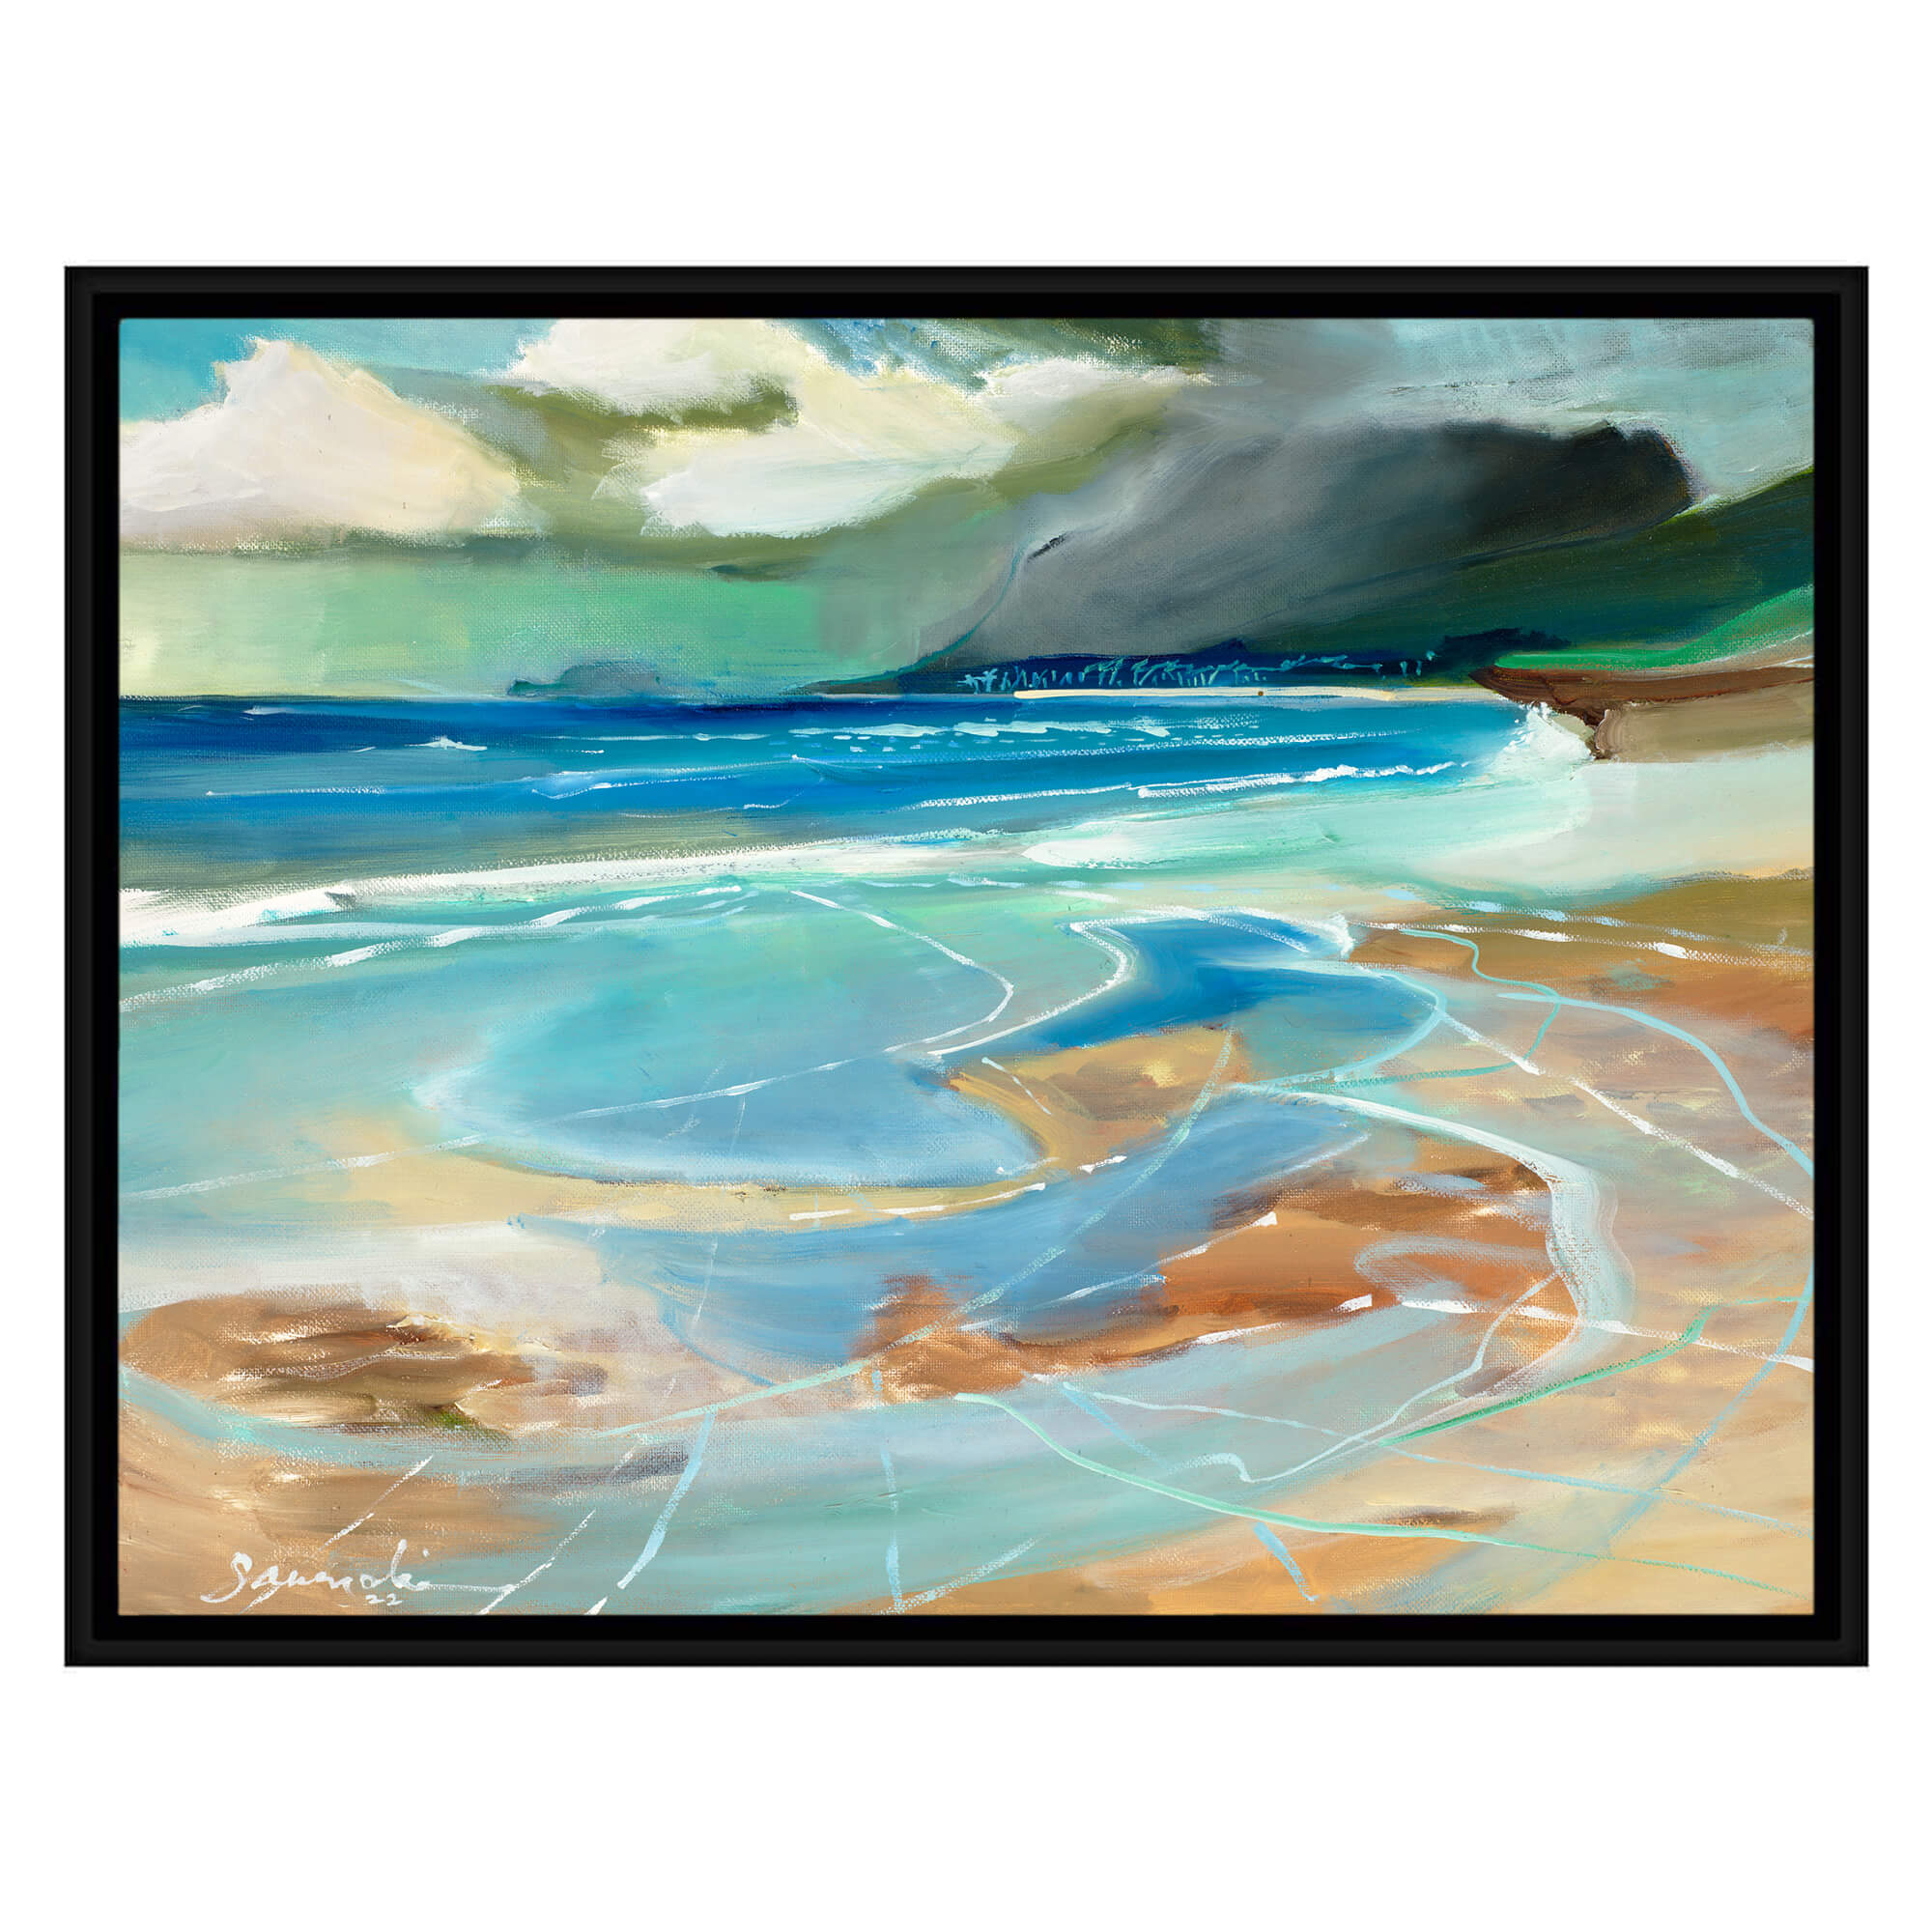 Teal and brown hued abstract seascape by Hawaii artist Saumolia Puapuaga